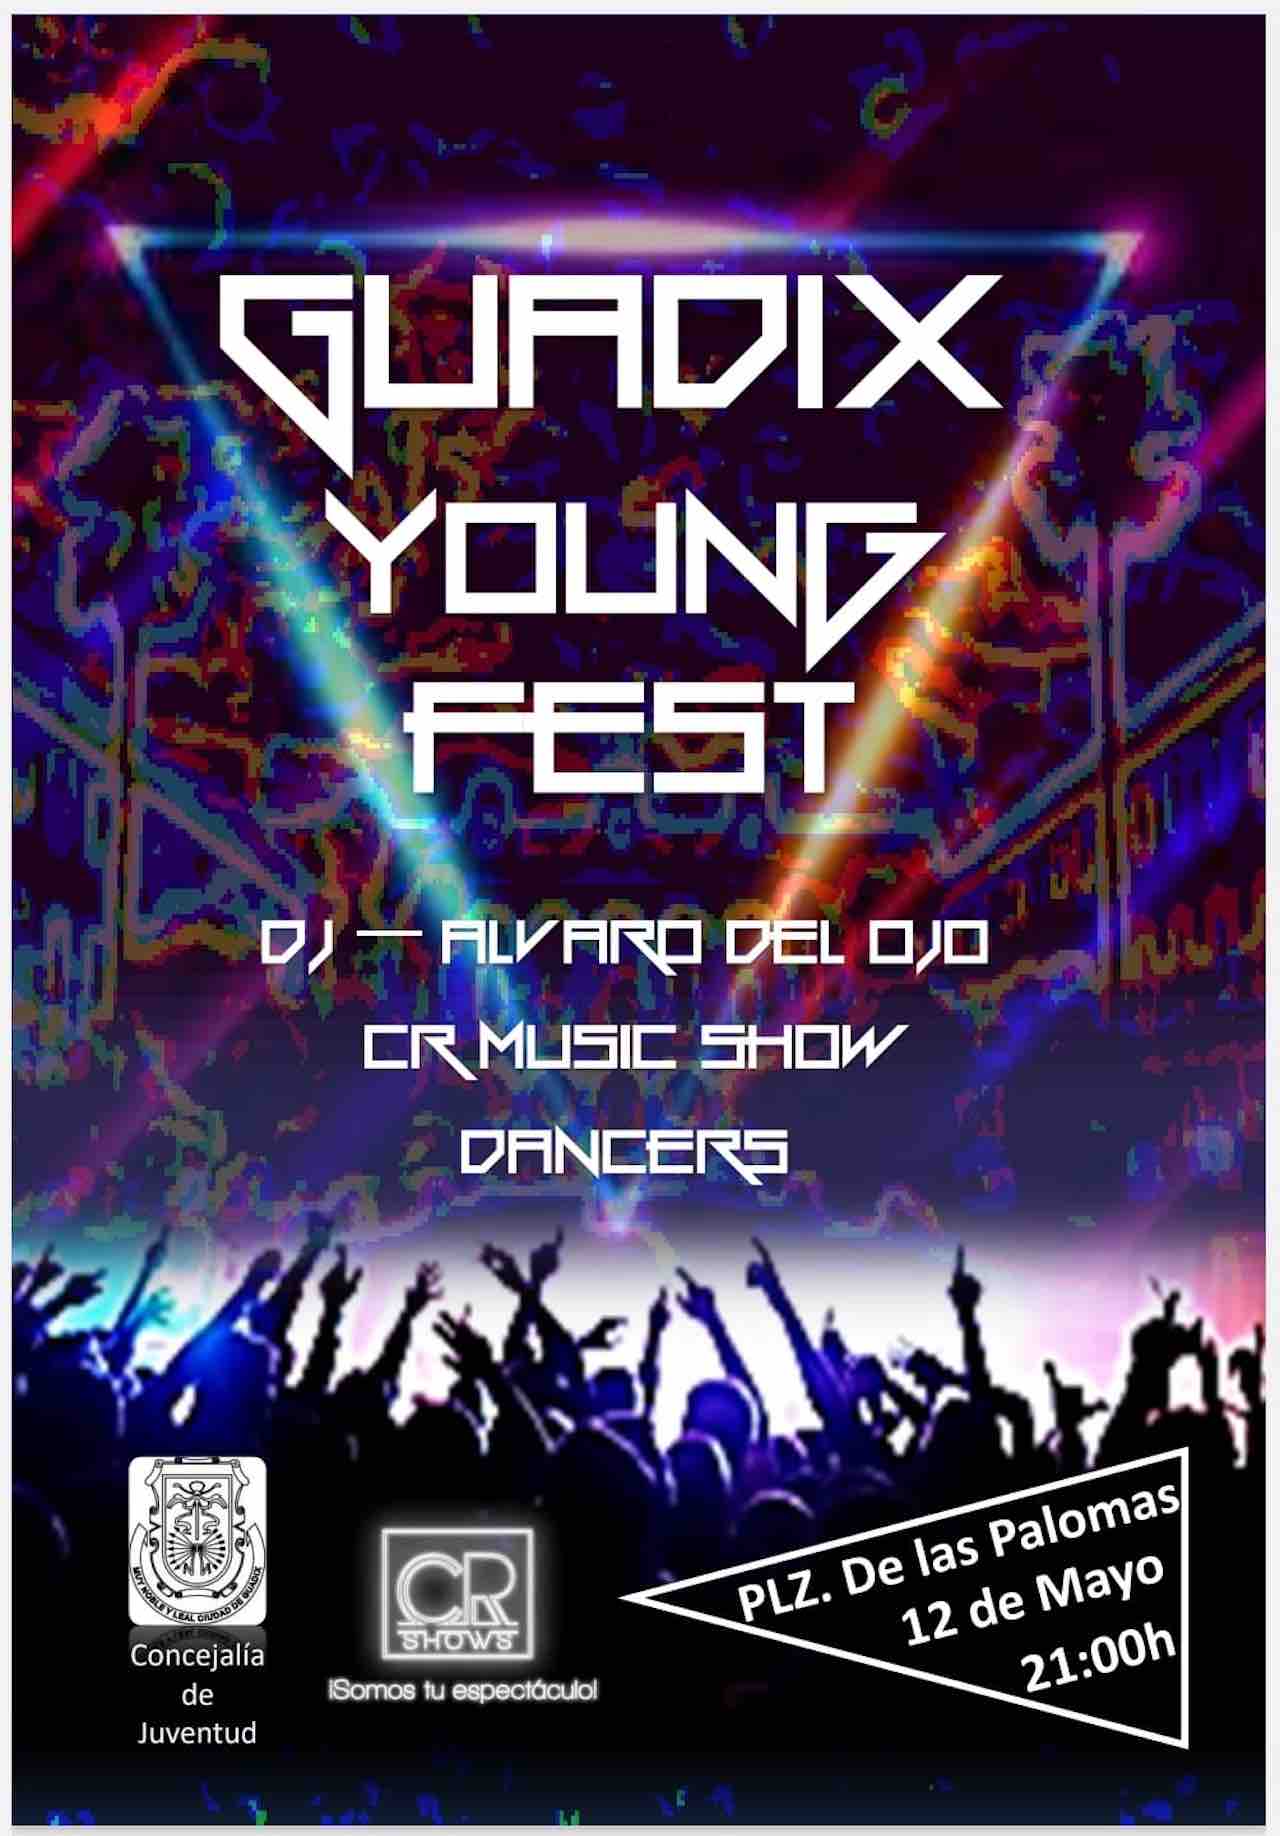 GUADIX Young fest